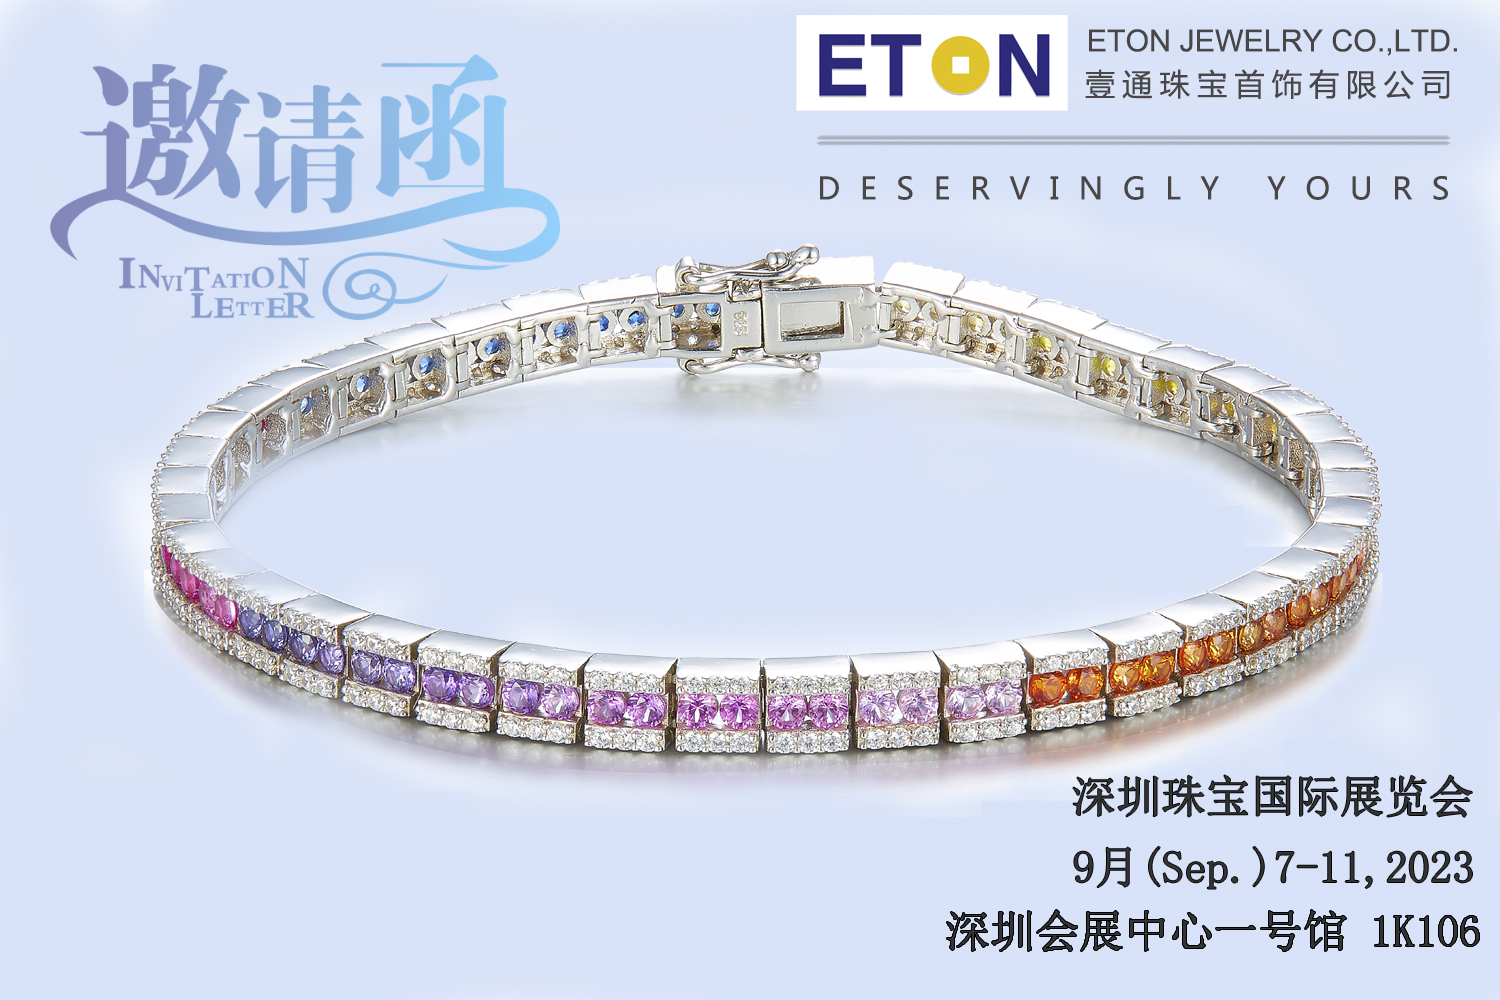 2023 September ShenZhen Jewelry Fair